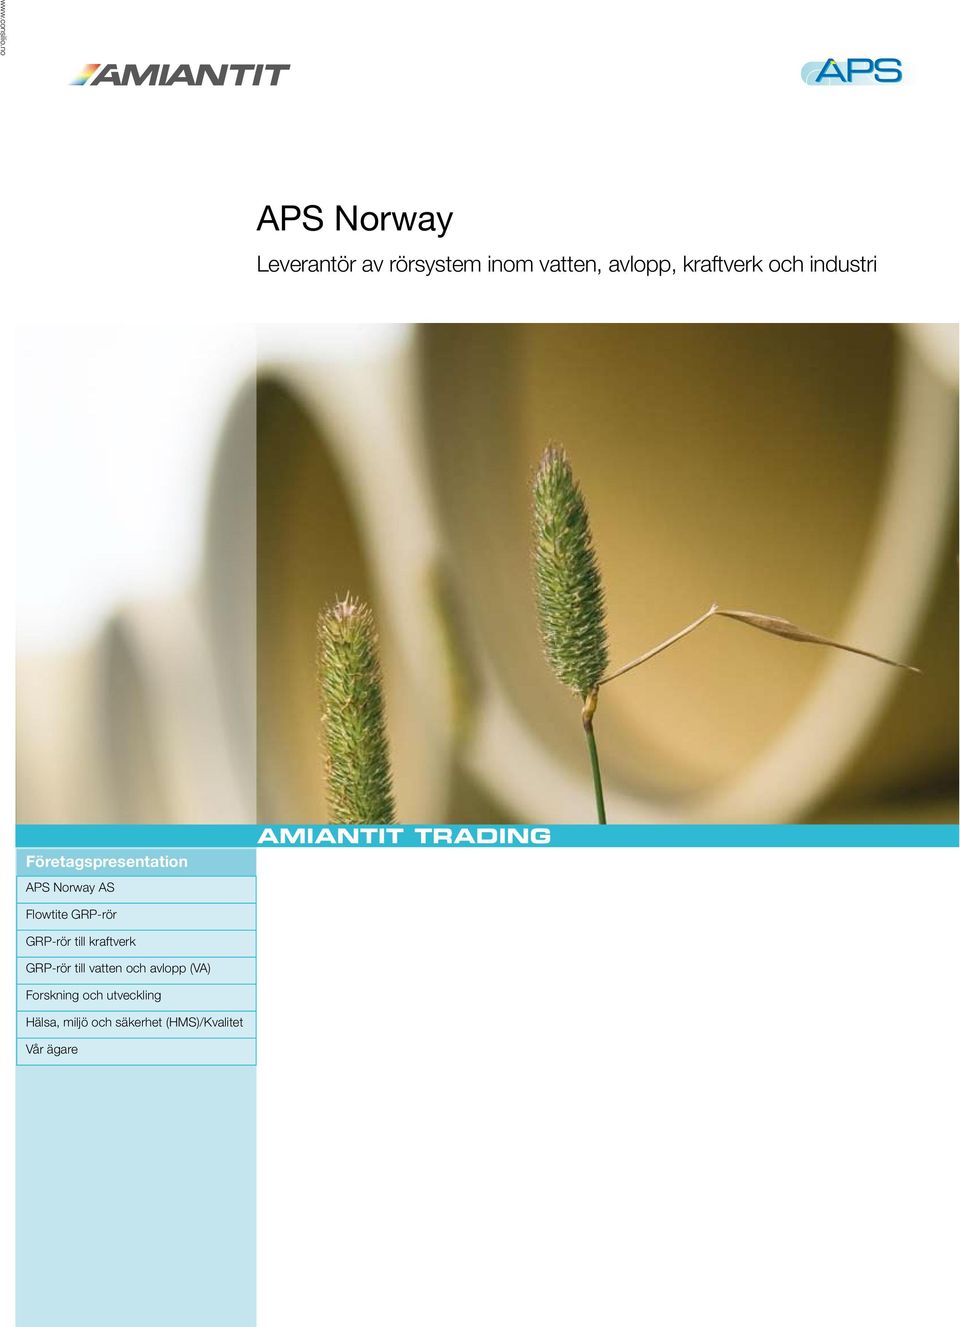 industri Företagspresentation APS Norway AS Amiantit trading Flowtite